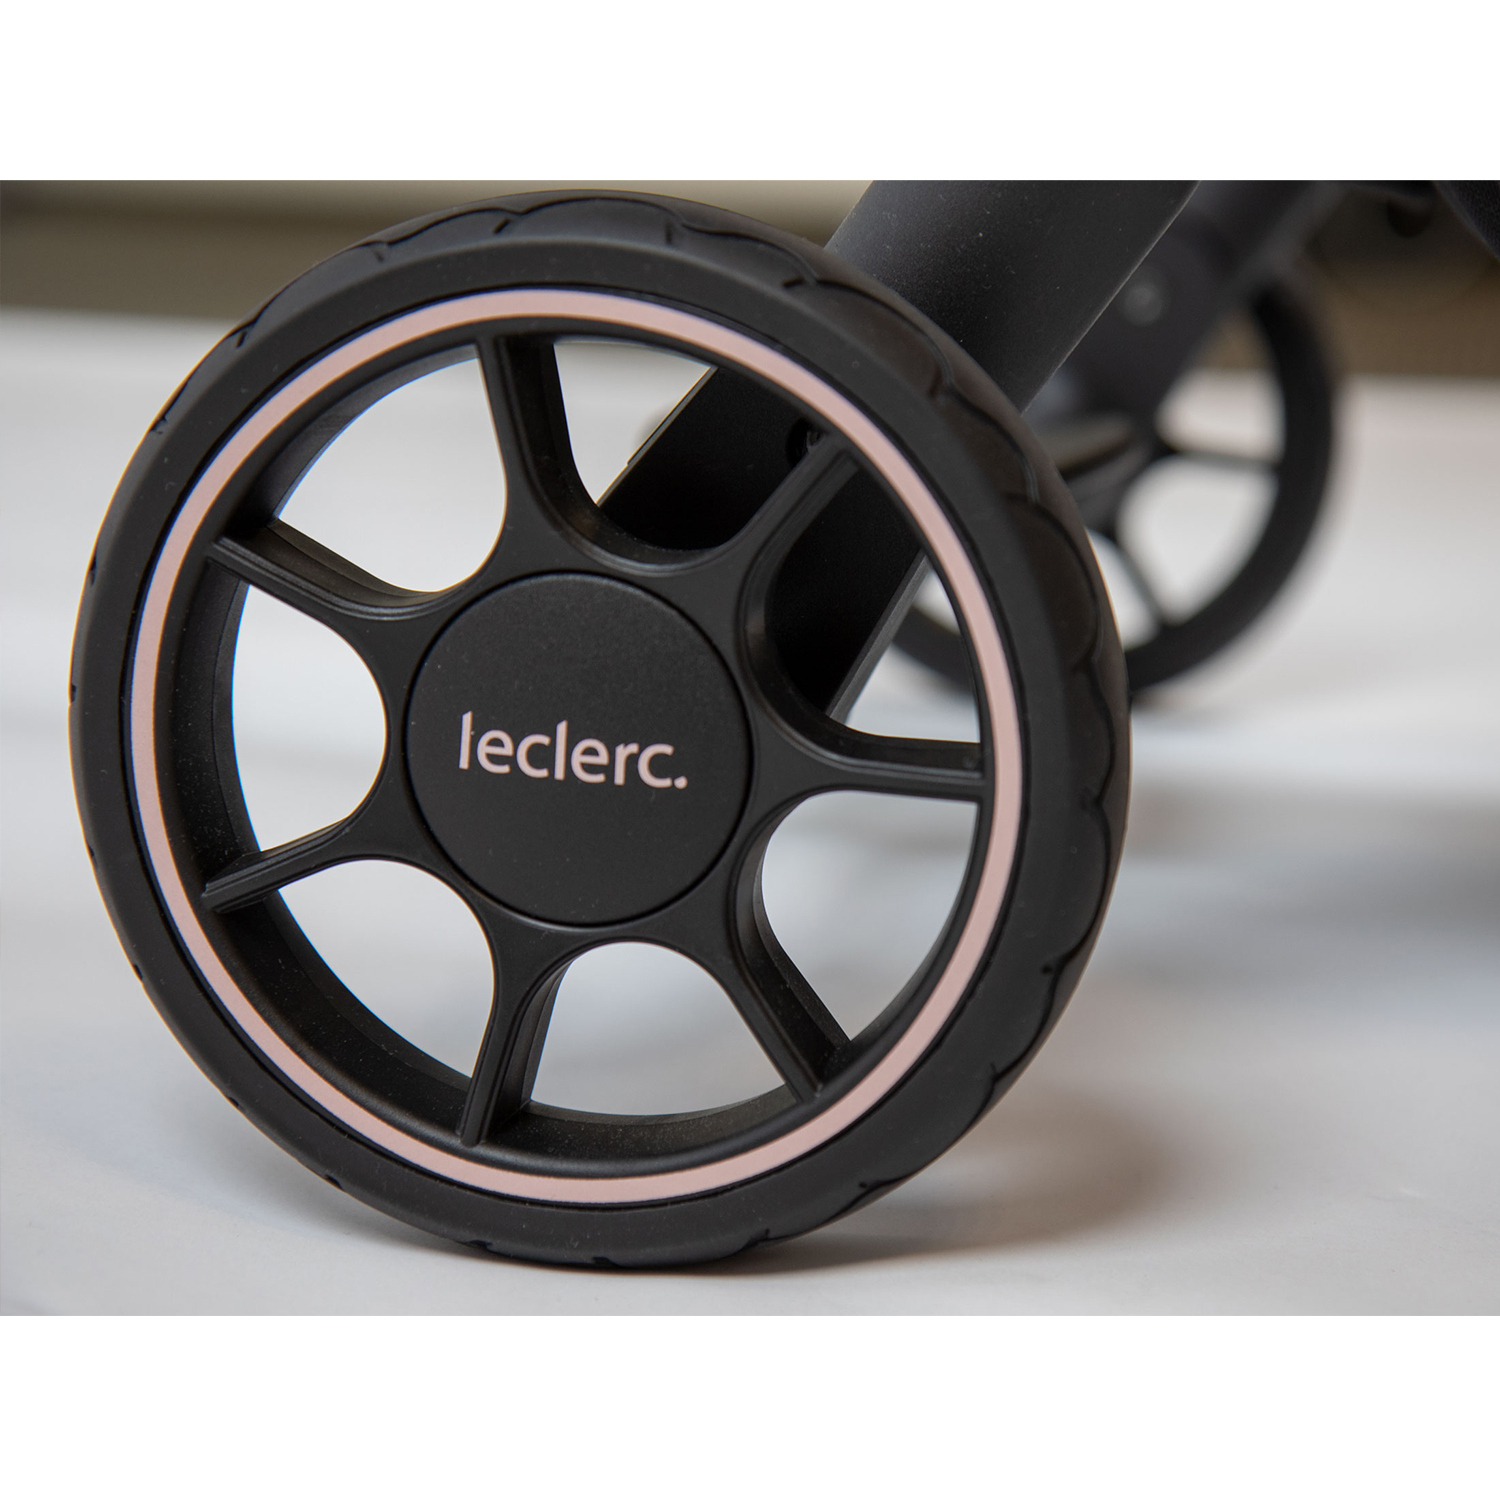 Прогулочная коляска Hexagon Champagne Leclerc, цвет нет цвета - фото 9